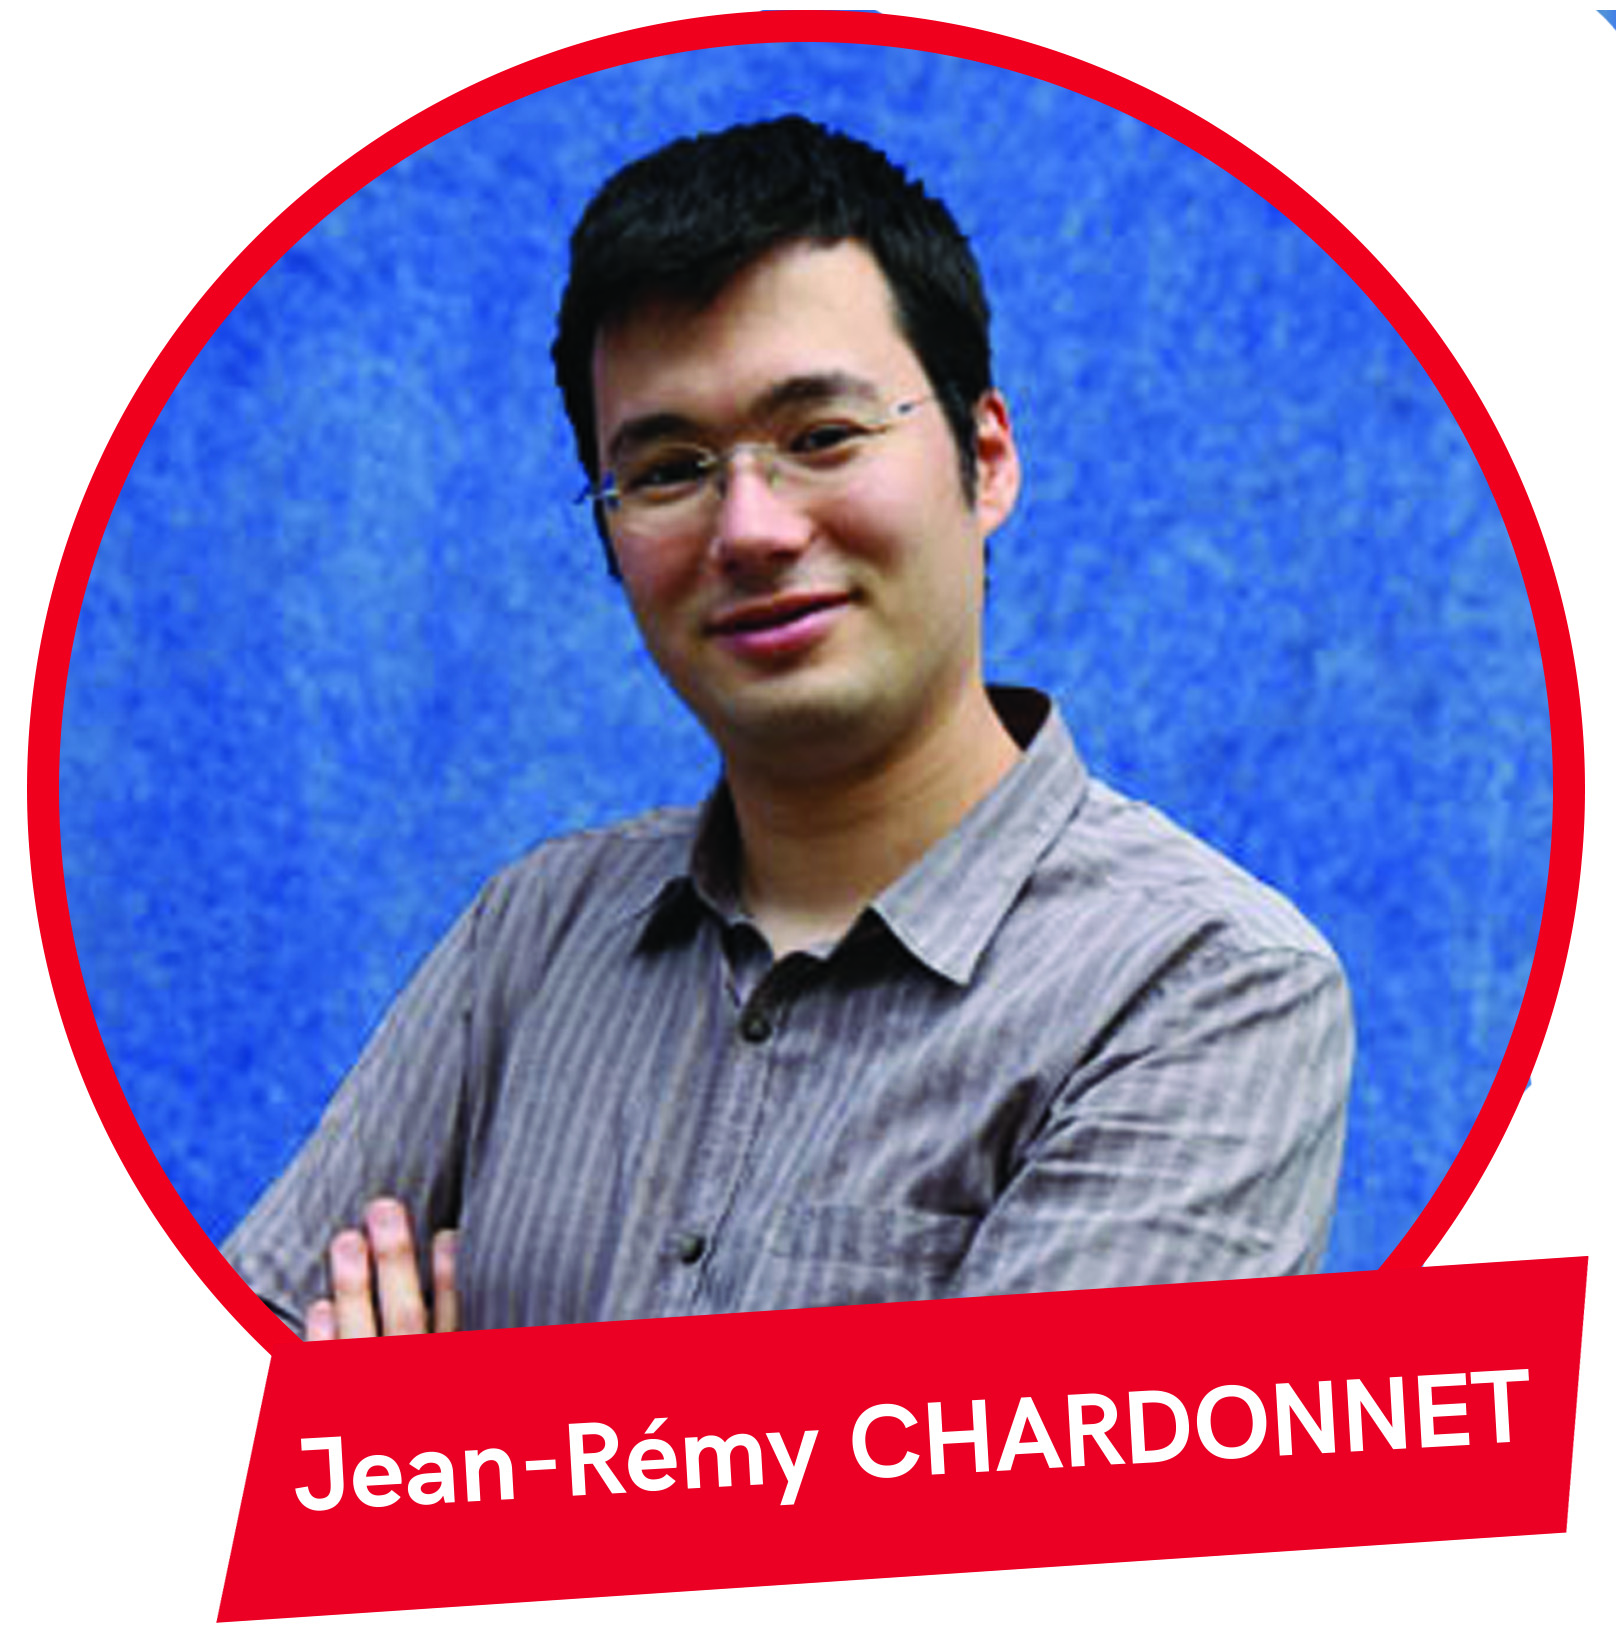 Jean-rémy Chardonnet